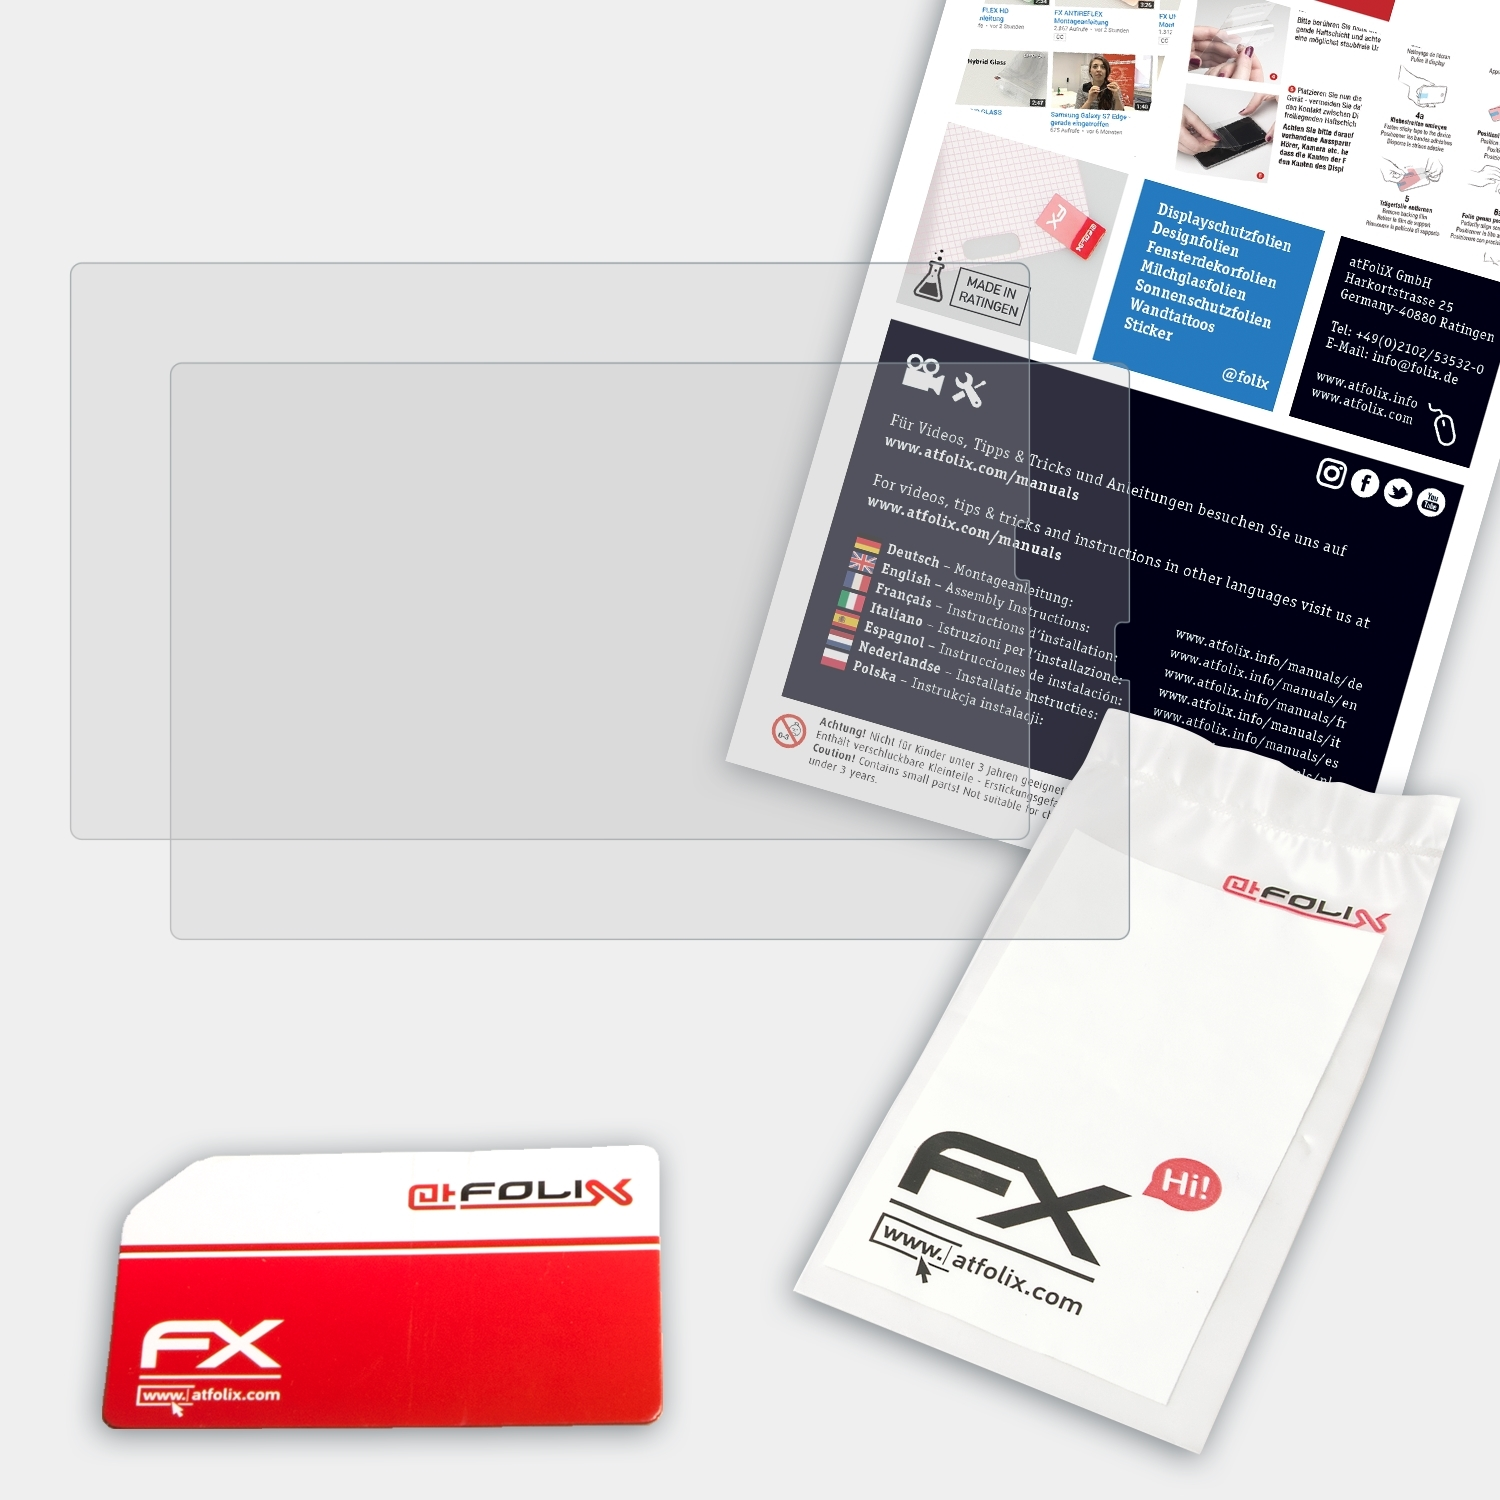 2x MobileStudio Pro FX-Antireflex Displayschutz(für 13) ATFOLIX Wacom